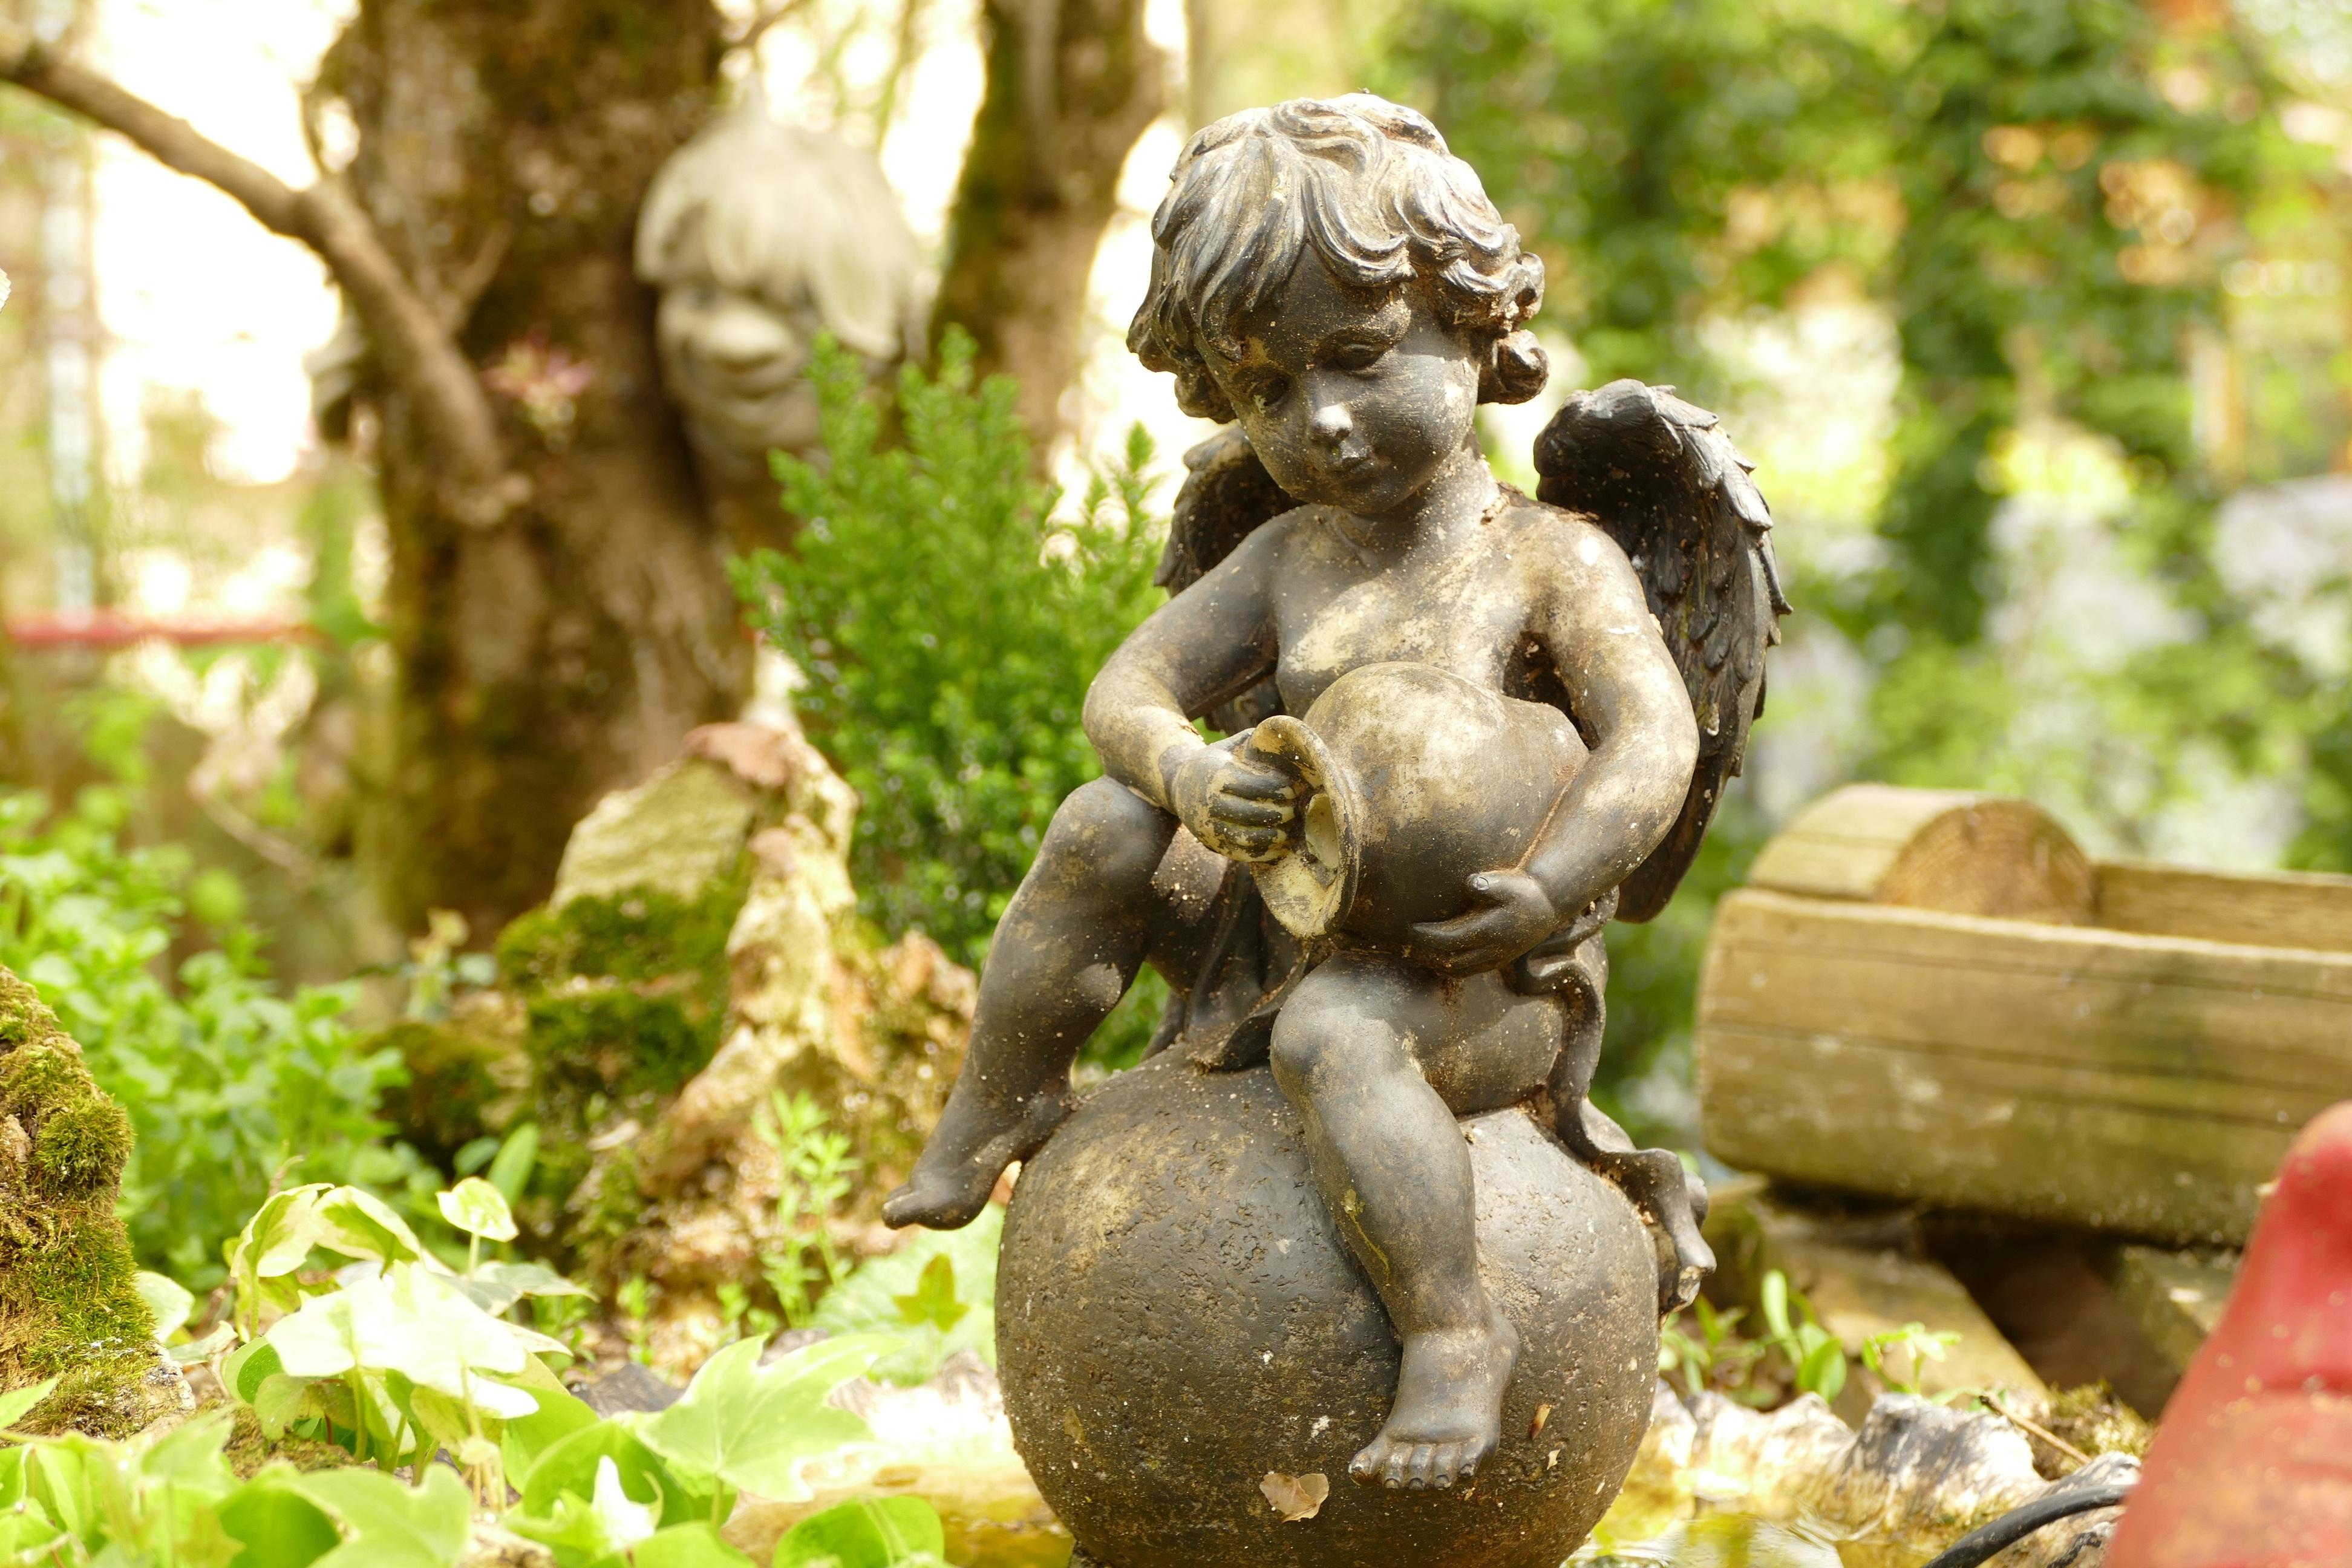 A cherub statue in a garden 4k Ultra HD Wallpaper